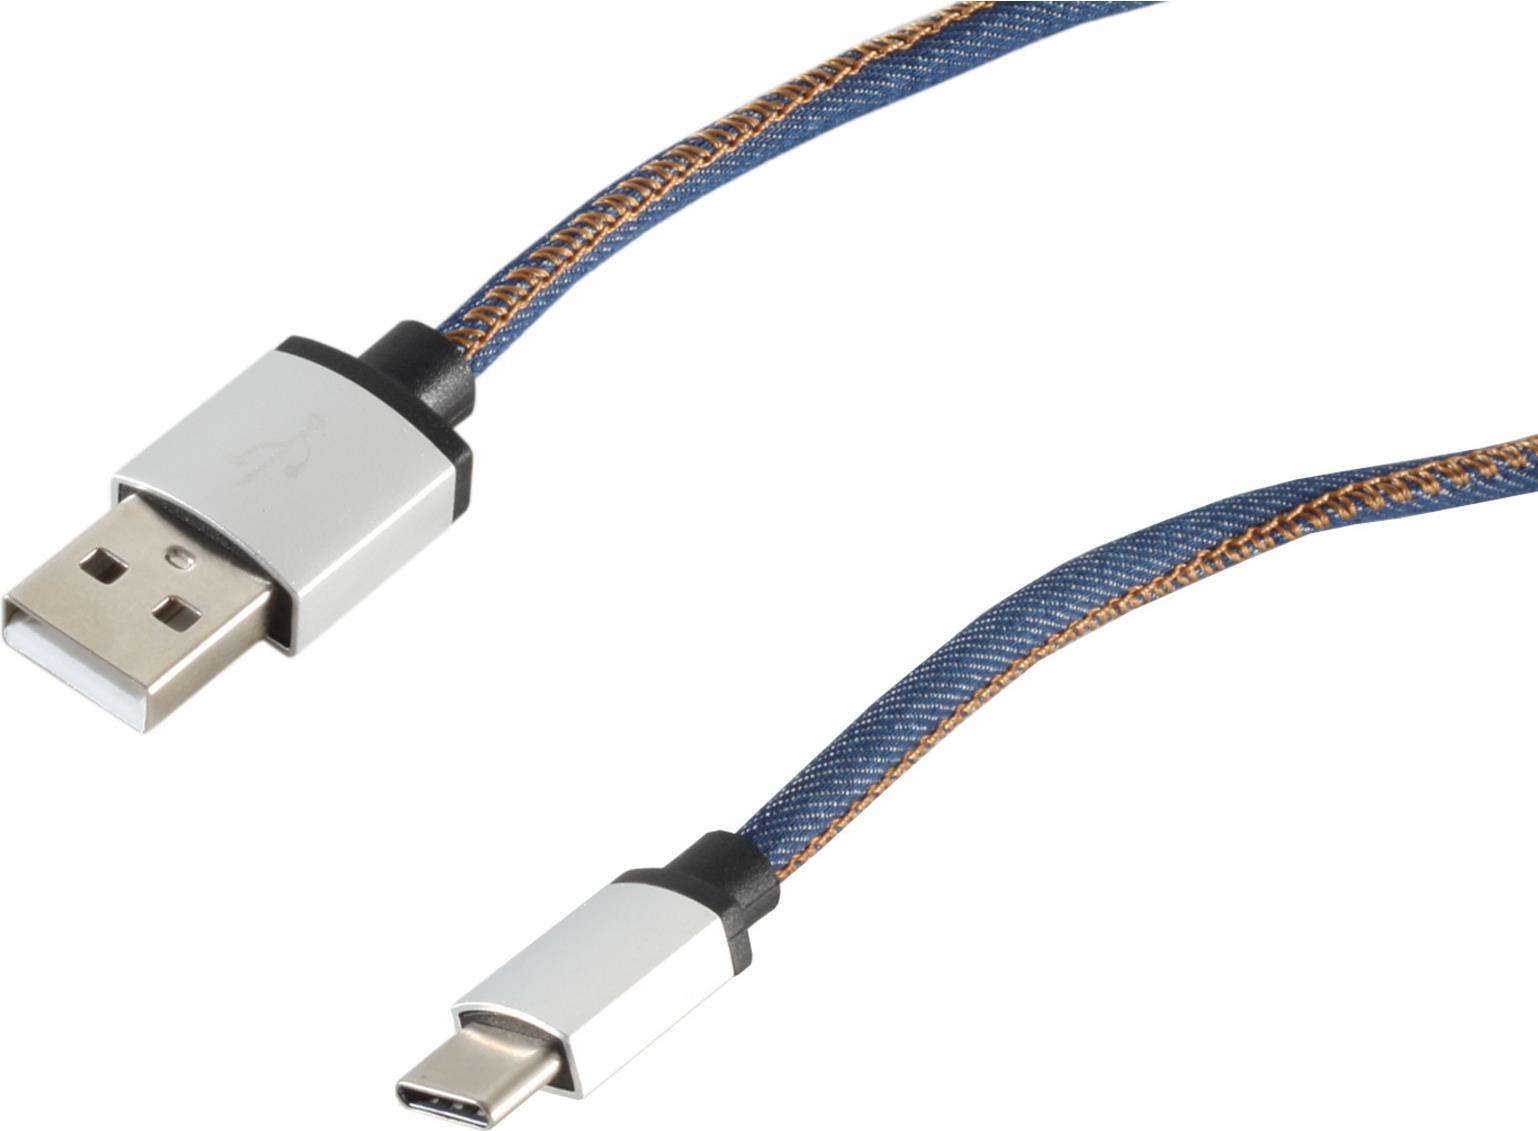 S-Conn 14-50030 2m USB A USB C Männlich Männlich Blau USB Kabel (14-50030)